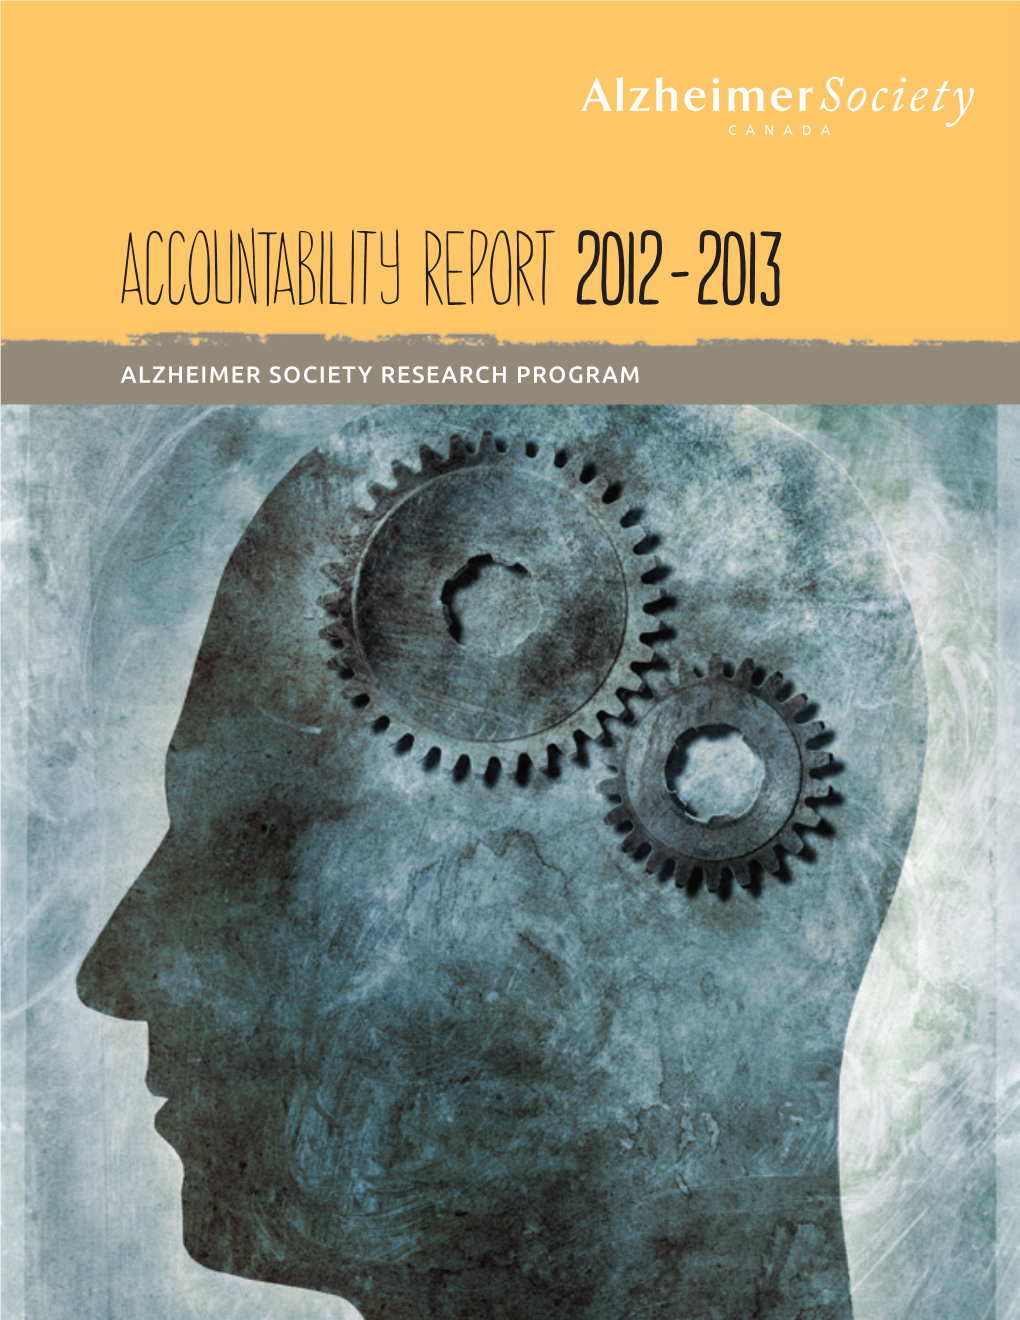 Alzheimer Society Research Program Accountability Report 2012-2013